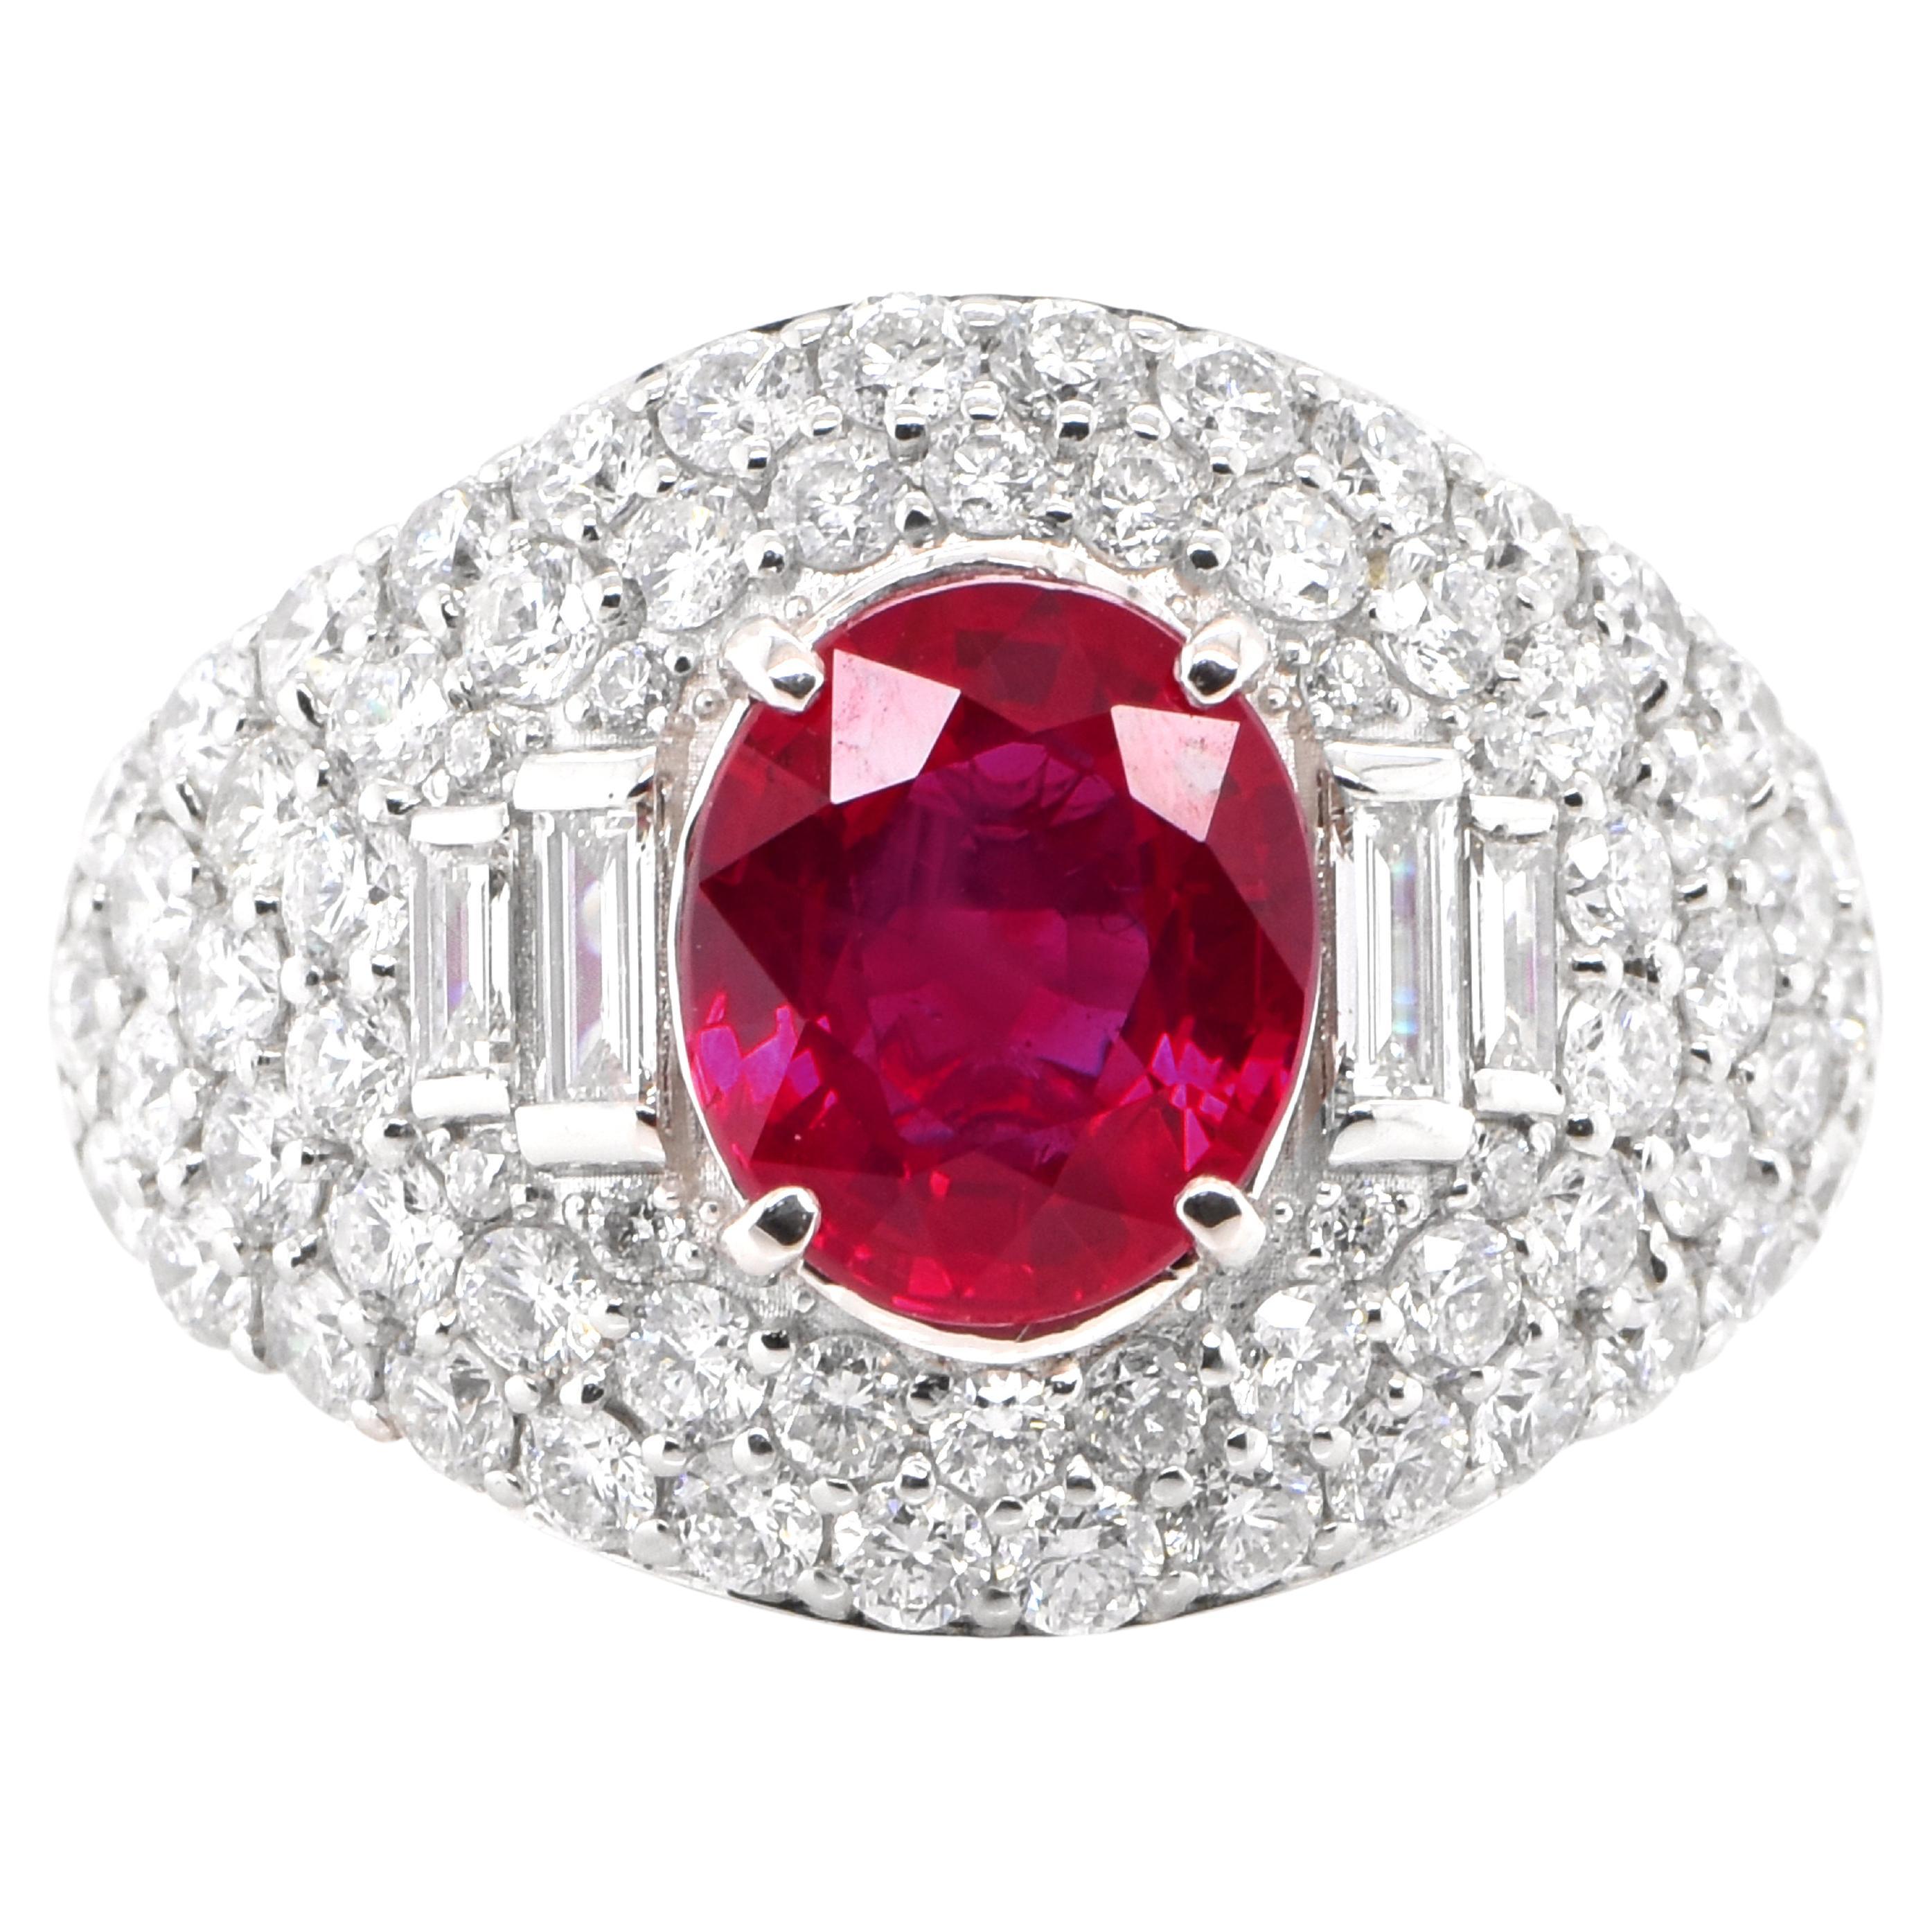 GIA Certified 2.15 Carat Natural Burmese Ruby and Diamond Ring Set in Platinum